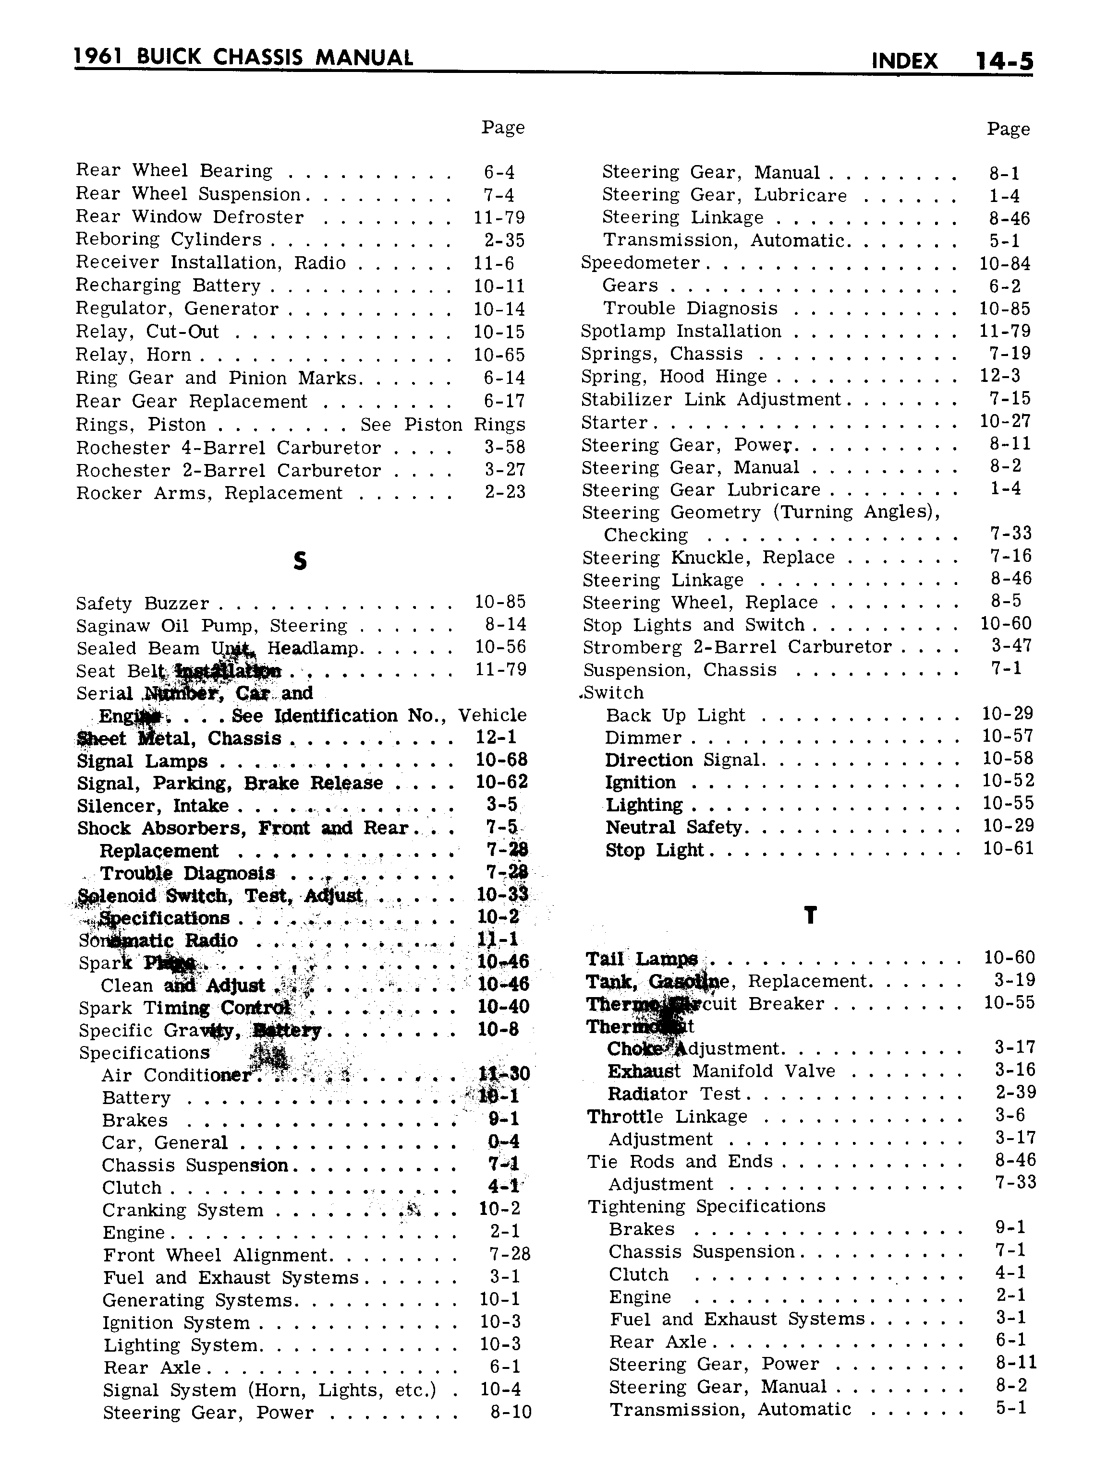 n_13 1961 Buick Shop Manual - Index-005-005.jpg